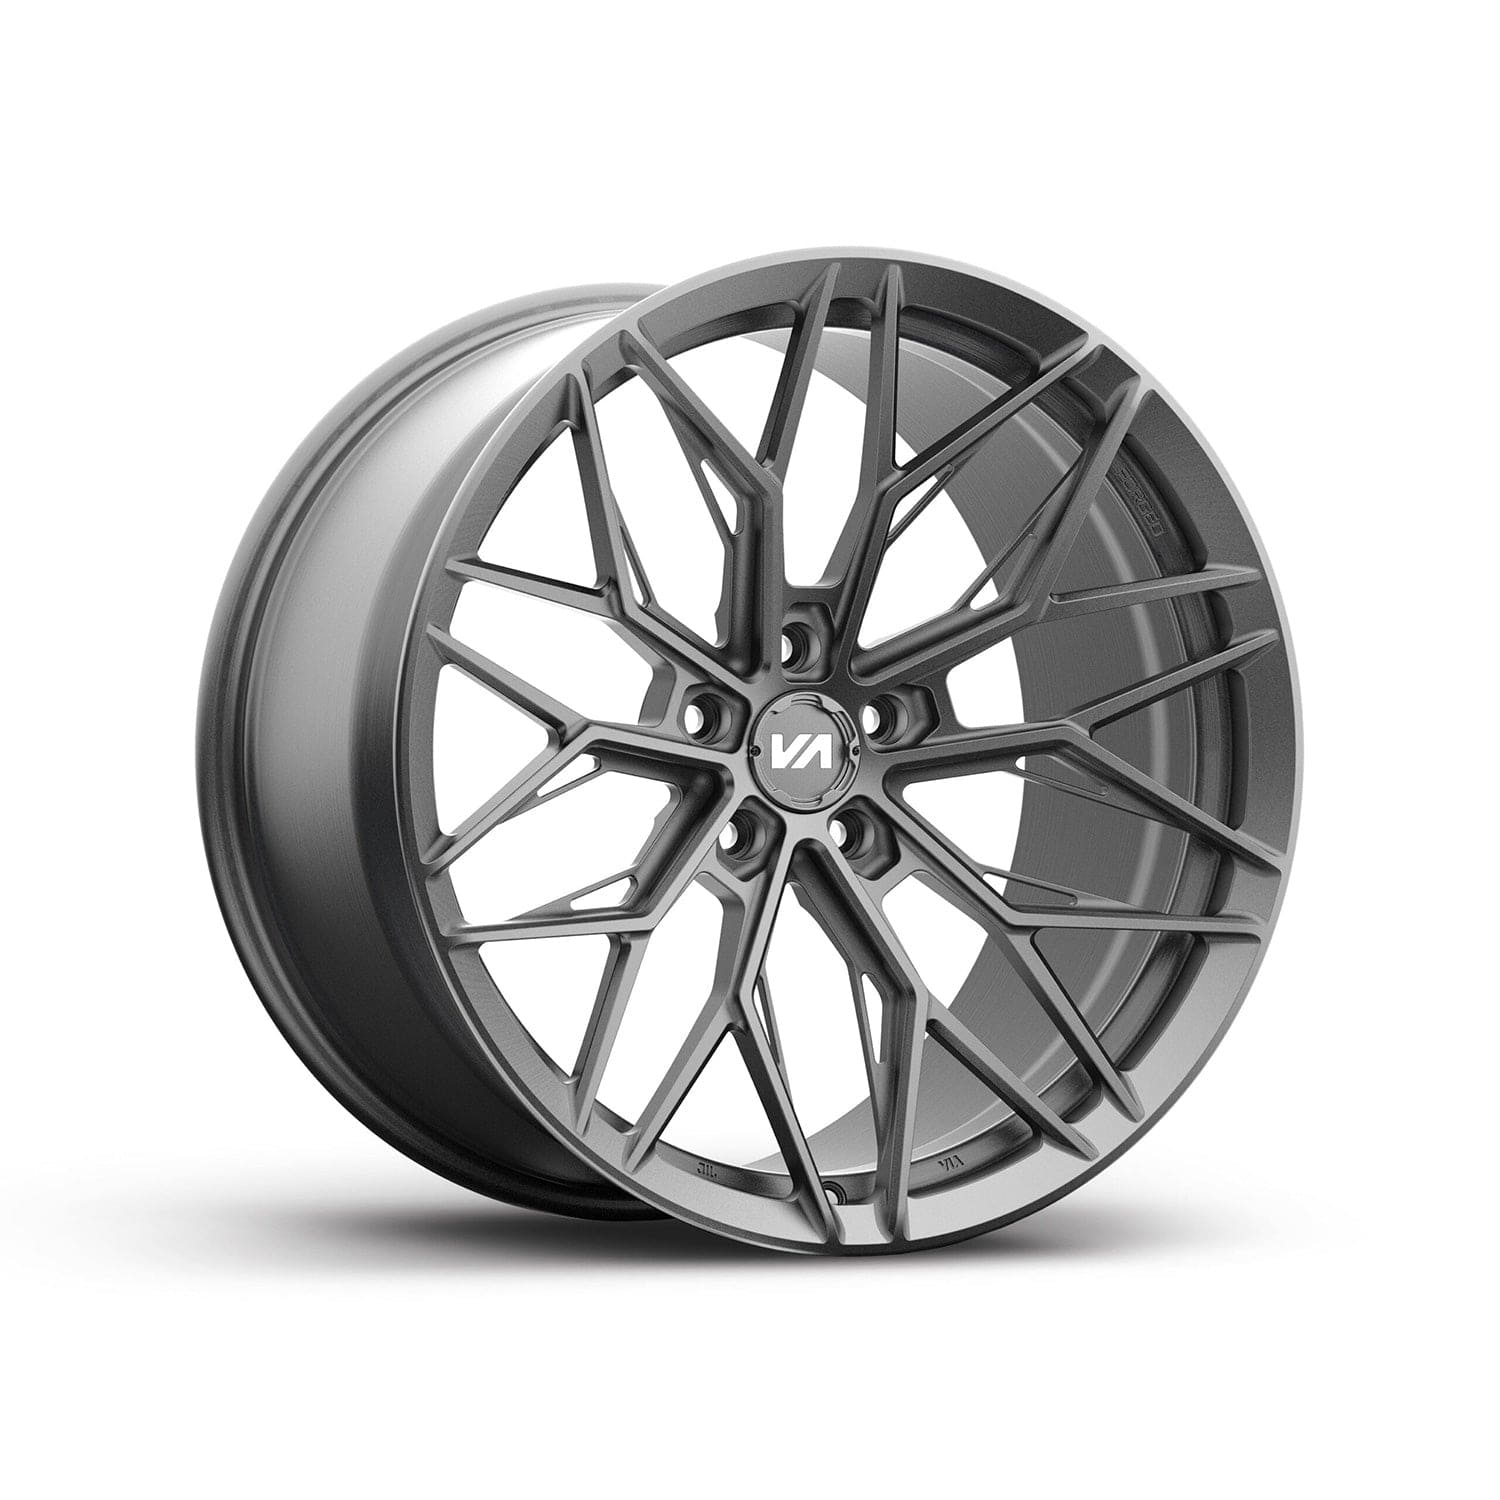 Kies-Motorsports Variant Variant™ Maxim Collection Alloy Wheels 19x10